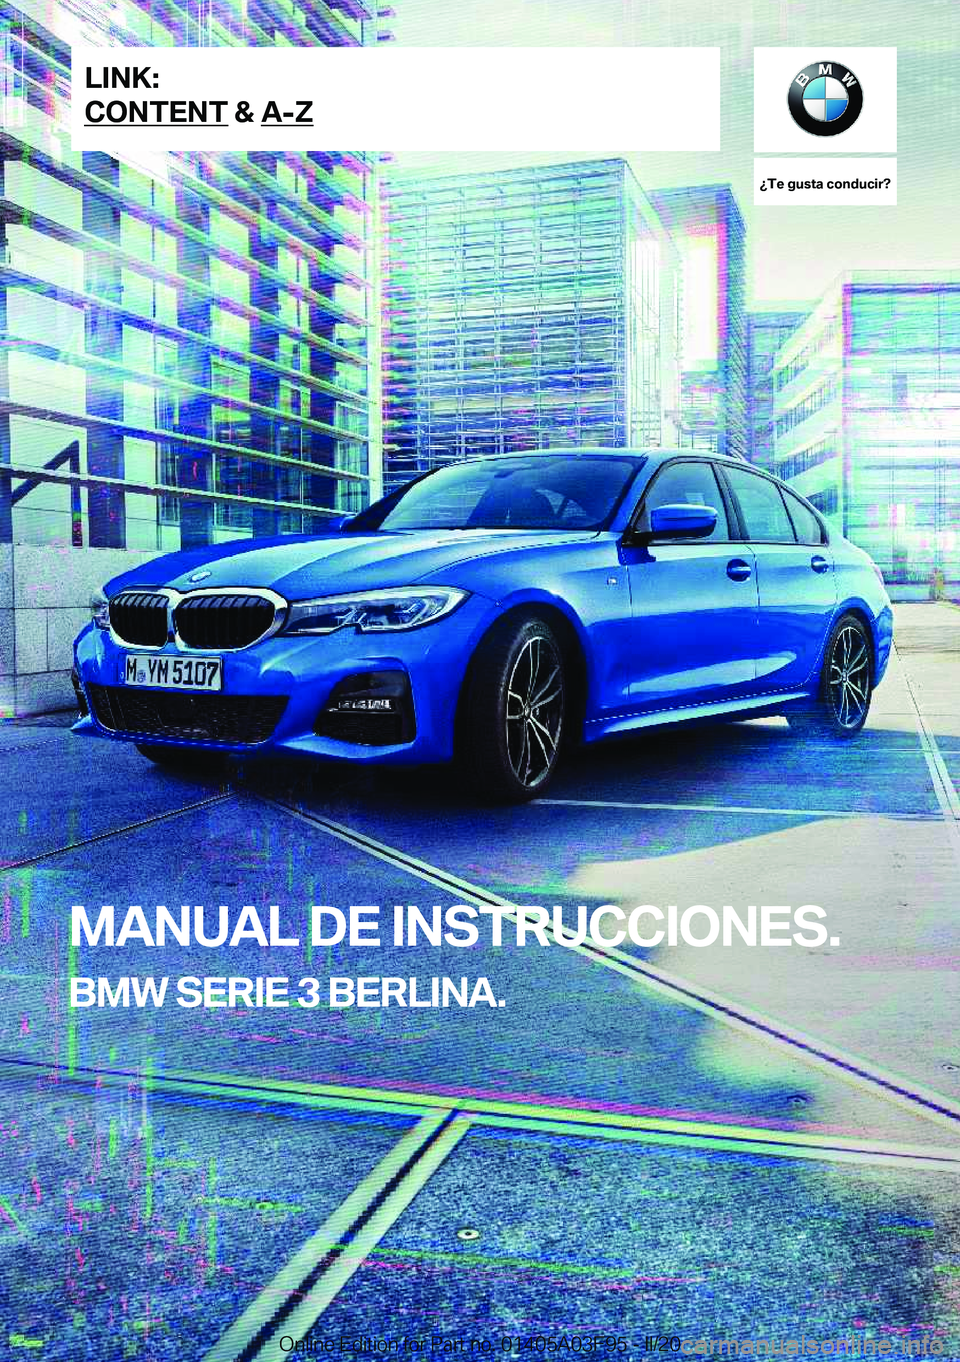 BMW 3 SERIES 2020  Manuales de Empleo (in Spanish) ��T�e��g�u�s�t�a��c�o�n�d�u�c�i�r� 
�M�A�N�U�A�L��D�E��I�N�S�T�R�U�C�C�I�O�N�E�S�.
�B�M�W��S�E�R�I�E��3��B�E�R�L�I�N�A�.�L�I�N�K�:
�C�O�N�T�E�N�T��&��A�-�Z�O�n�l�i�n�e��E�d�i�t�i�o�n��f�o�